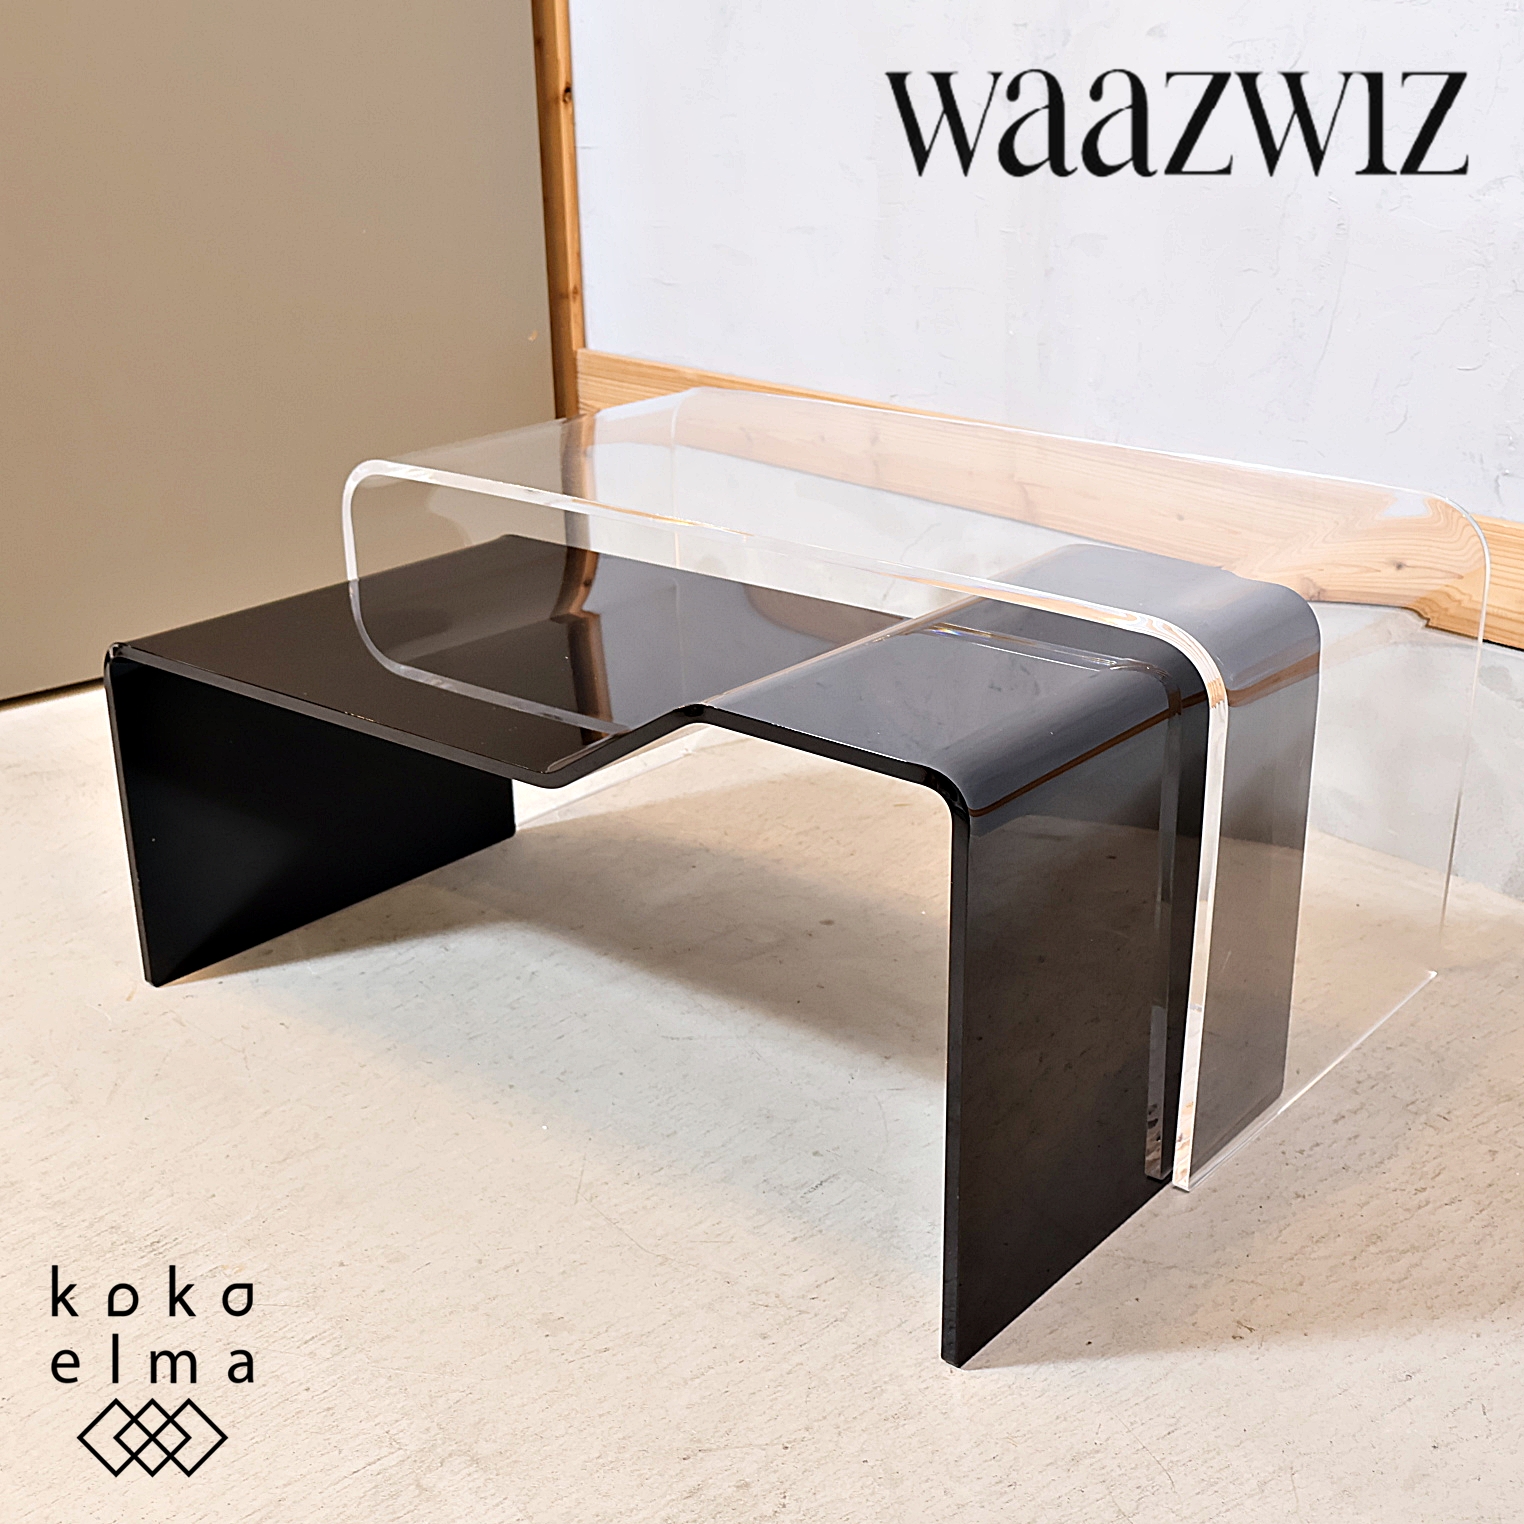 waazwizwa-z with IN SHORE in shoa acrylic fiber living table square & car b set low table runner table ED509